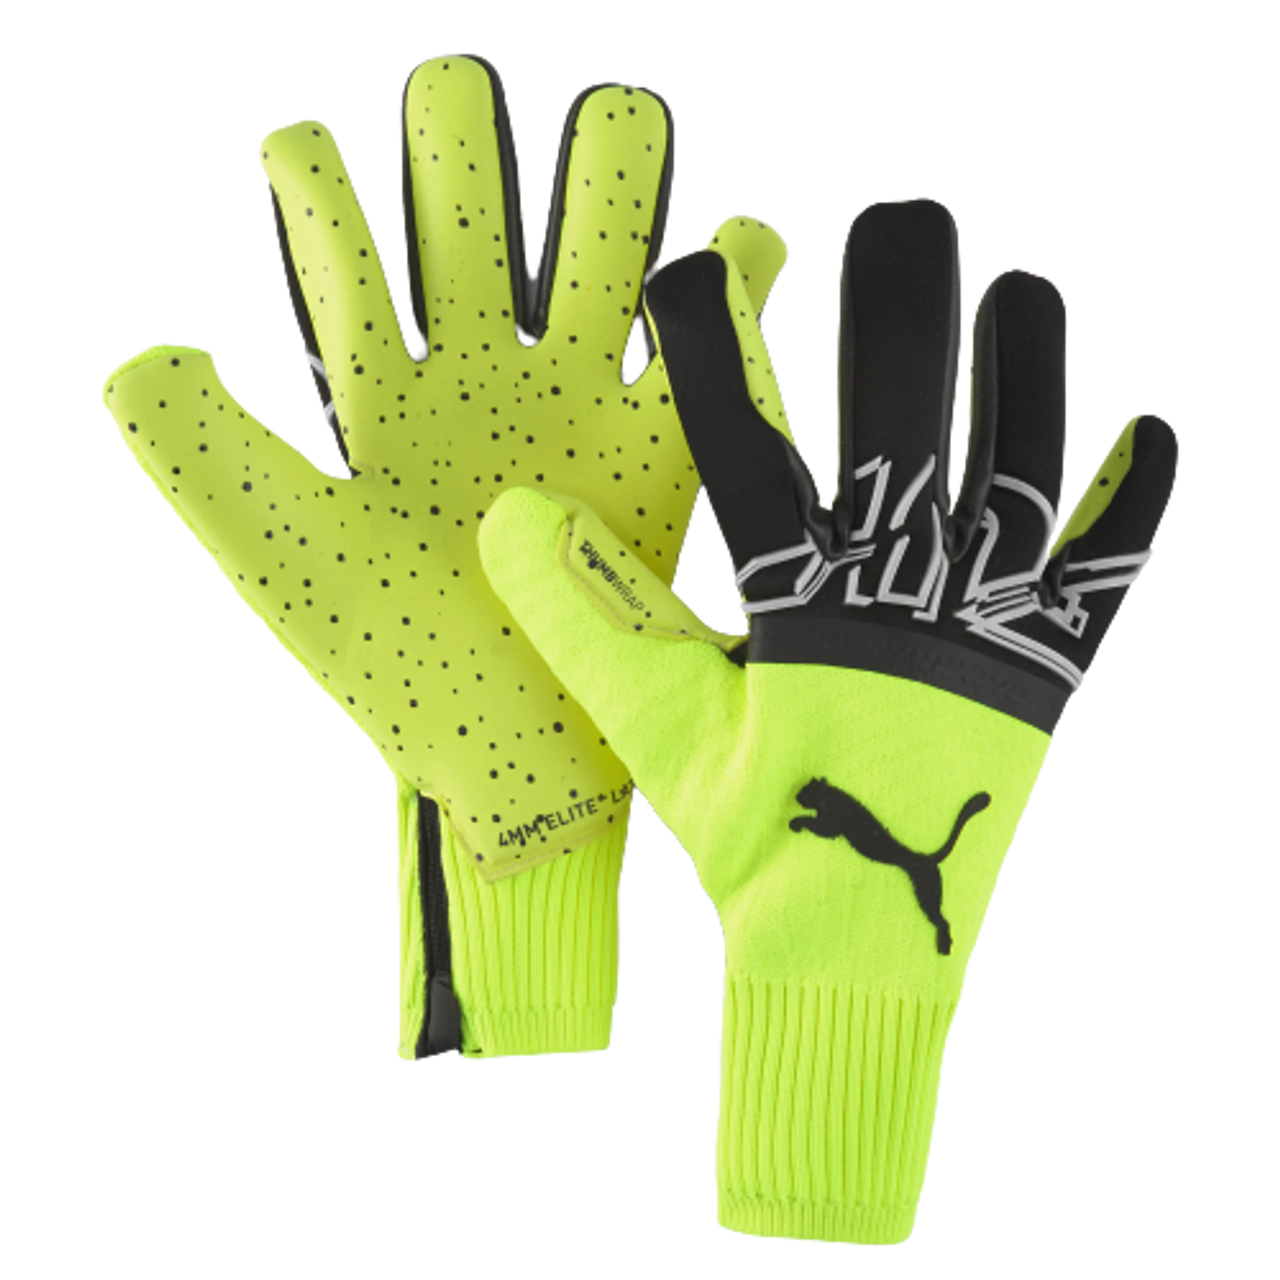 Puma Z Grip 1 Hybrid Goalkeeper Gloves